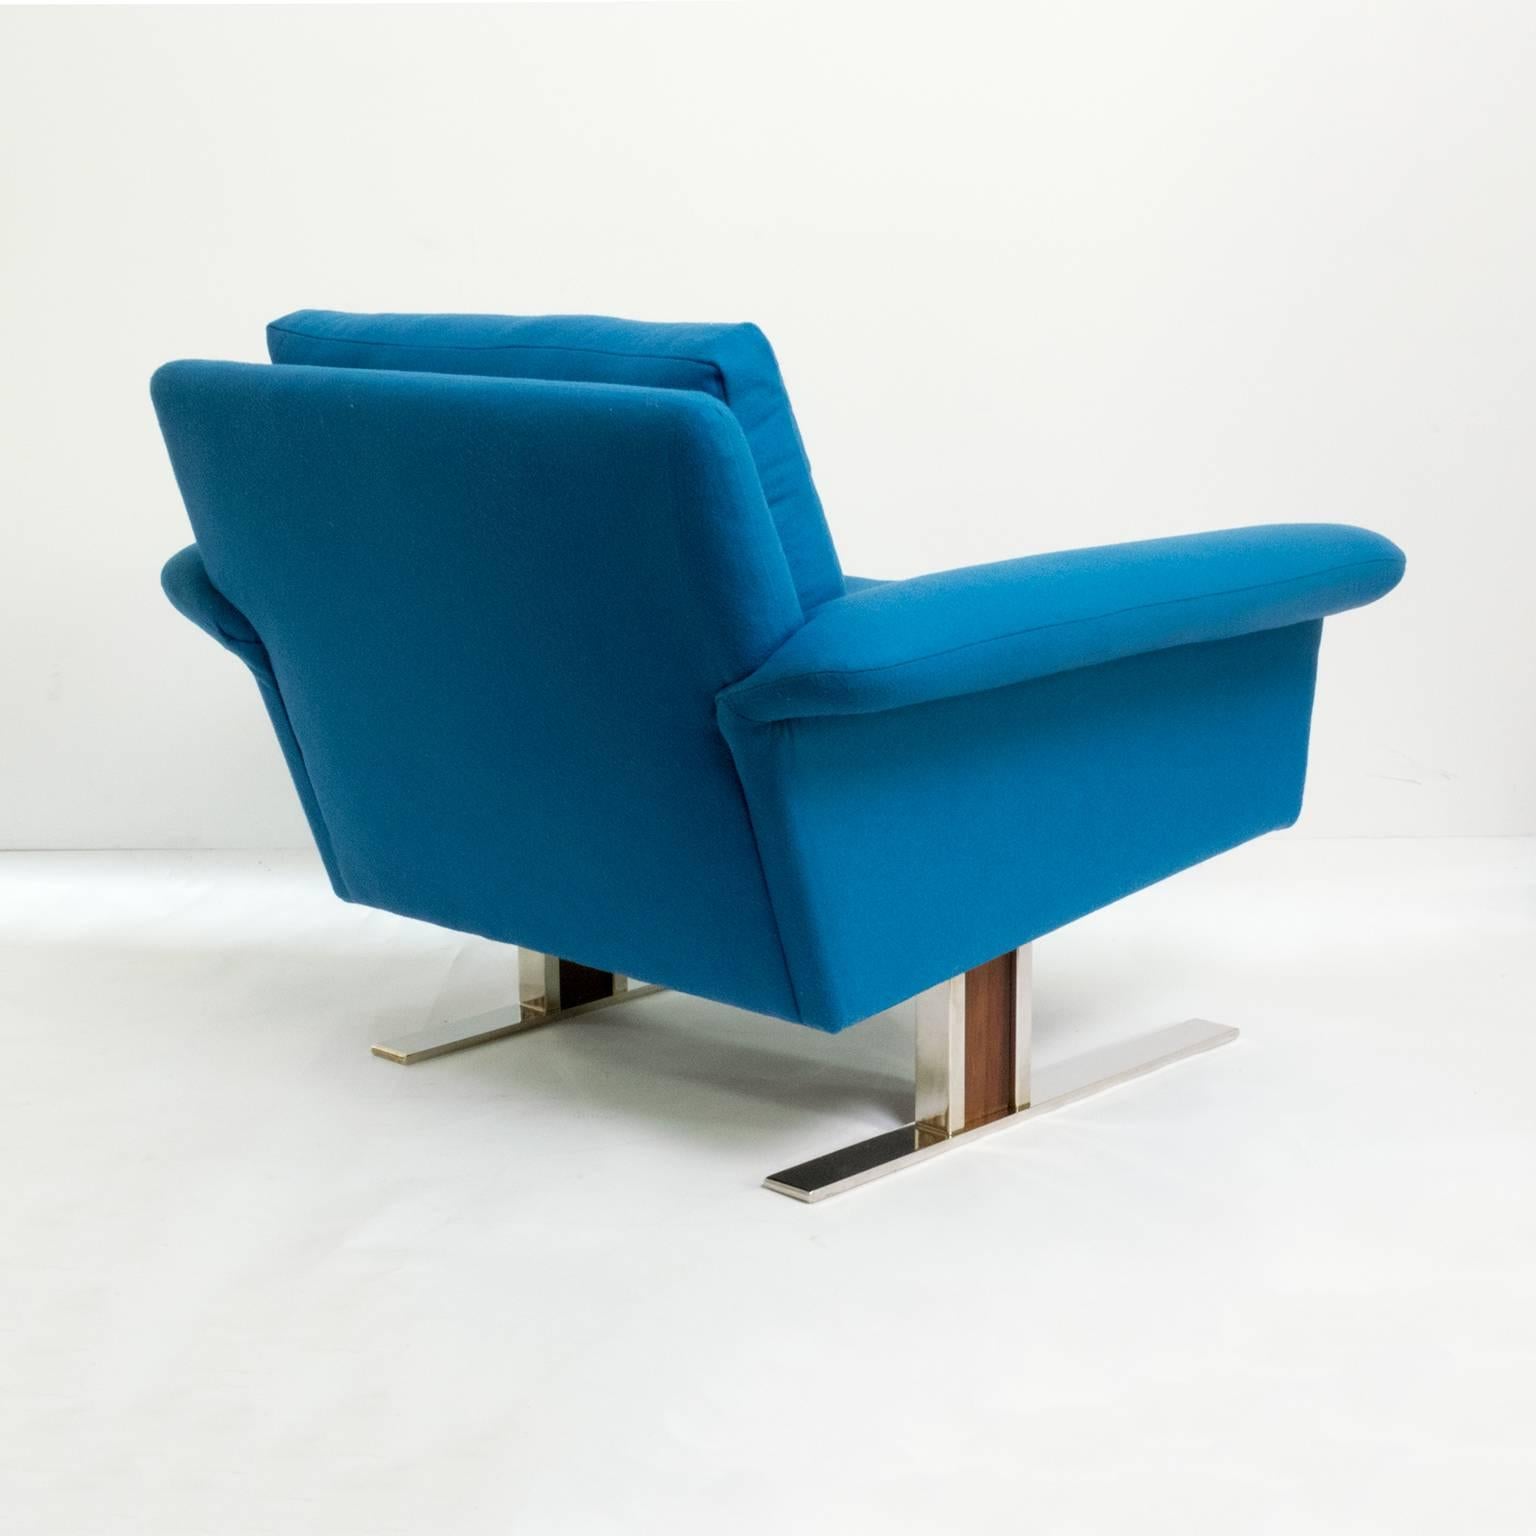 20th Century Scandinavian Modern Chairs Johannes Andersen for AB Trensums, Sweden